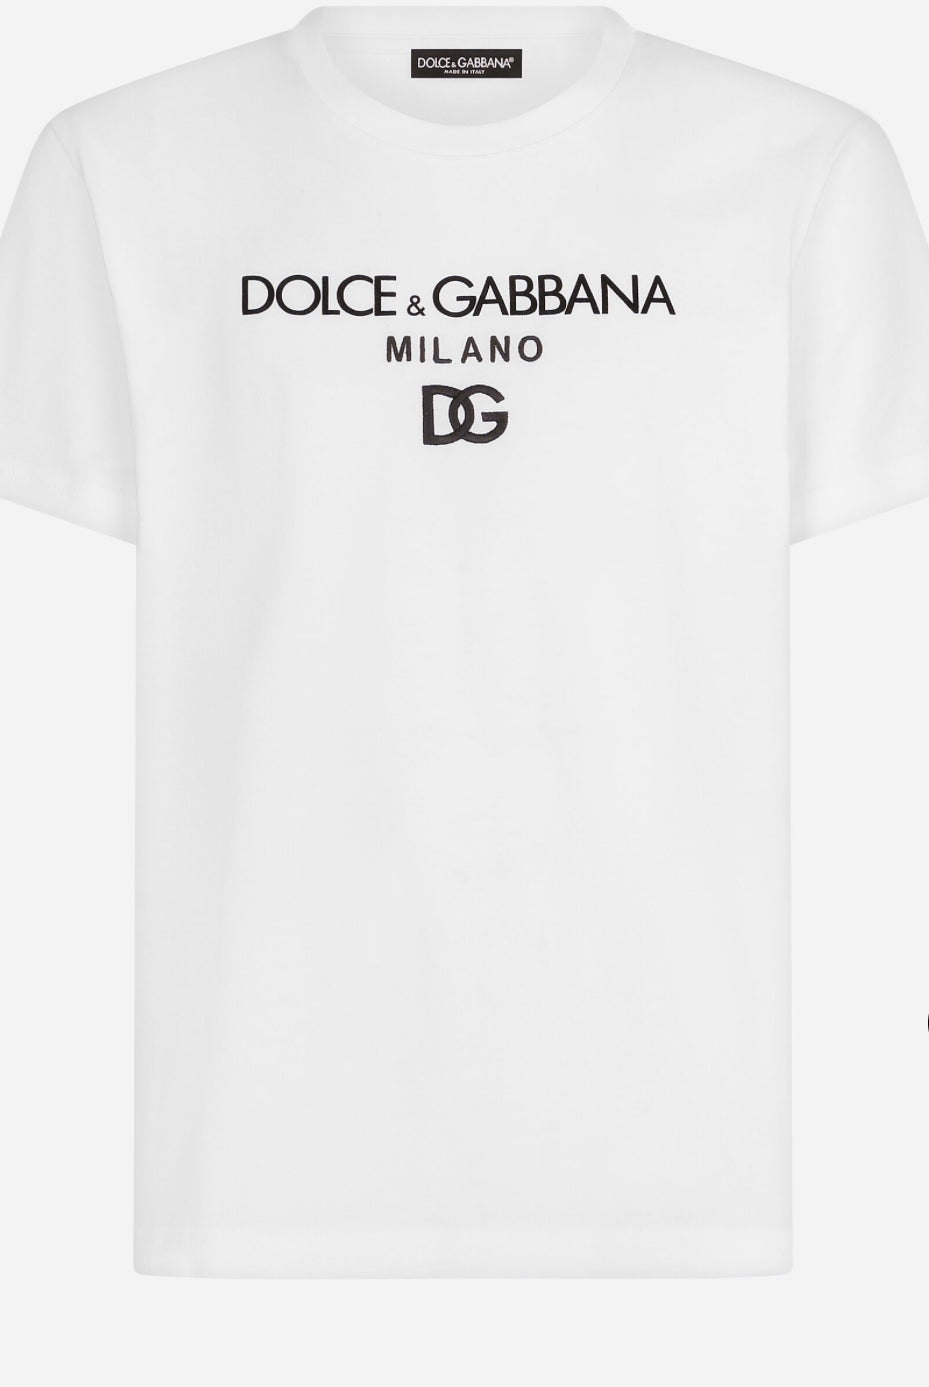 DOLCE & GABBANA MILANO DG LOGO TSHIRT - WHITE